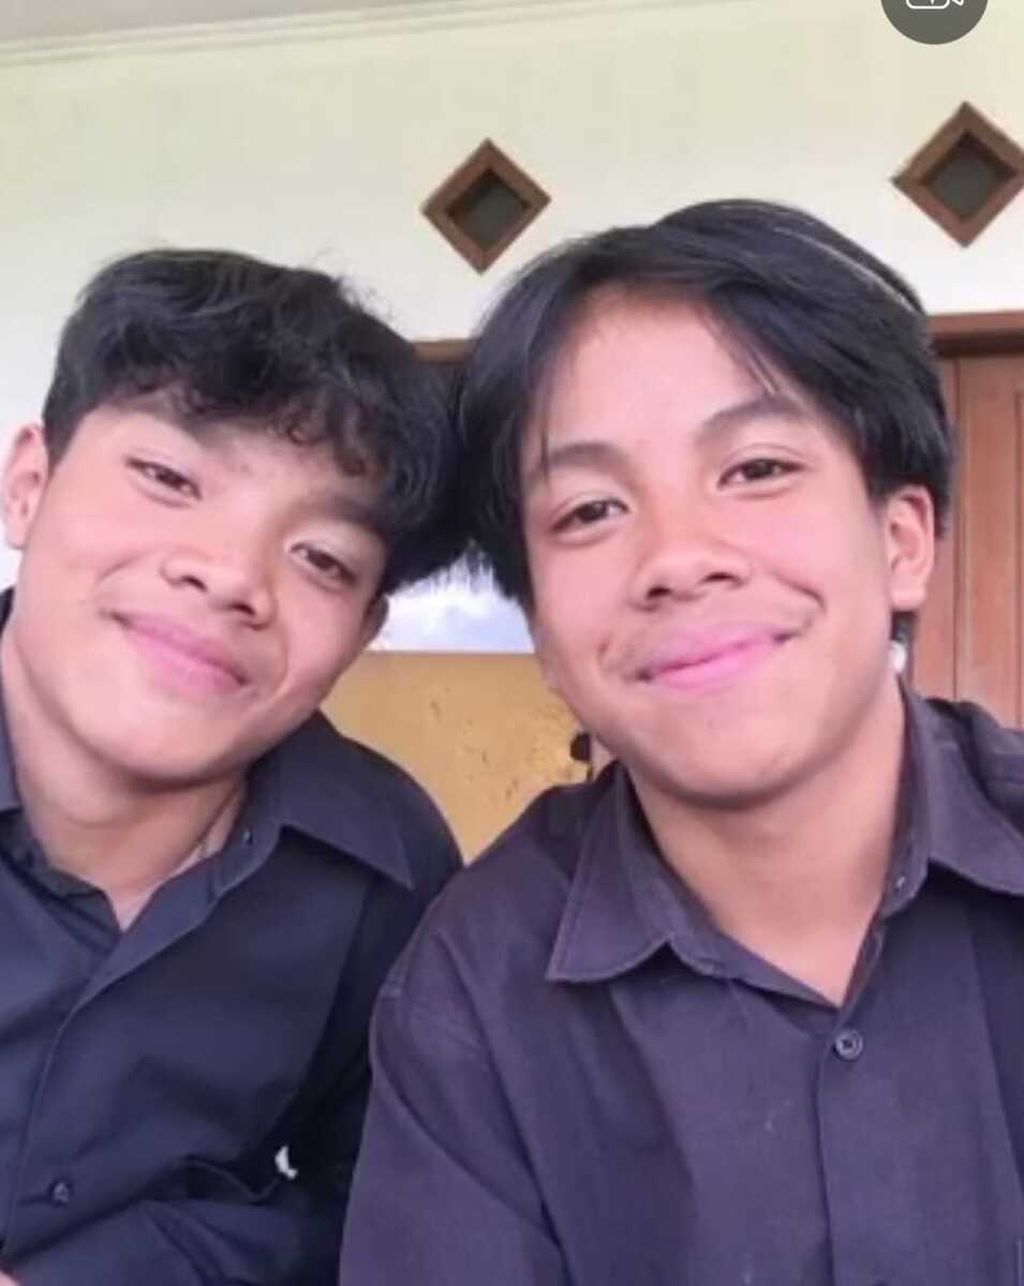 Dhika dan Drian, anak kembar yang tinggal di Panti Asuhan Rumah Kasih, Lembang, Jawa Barat. Semenjak usia delapan bulan, mereka diasuh di panti asuhan tersebut. Keduanya hanya tahu orangtuanya masih hidup, tetapi tidak pernah bertemu mereka.